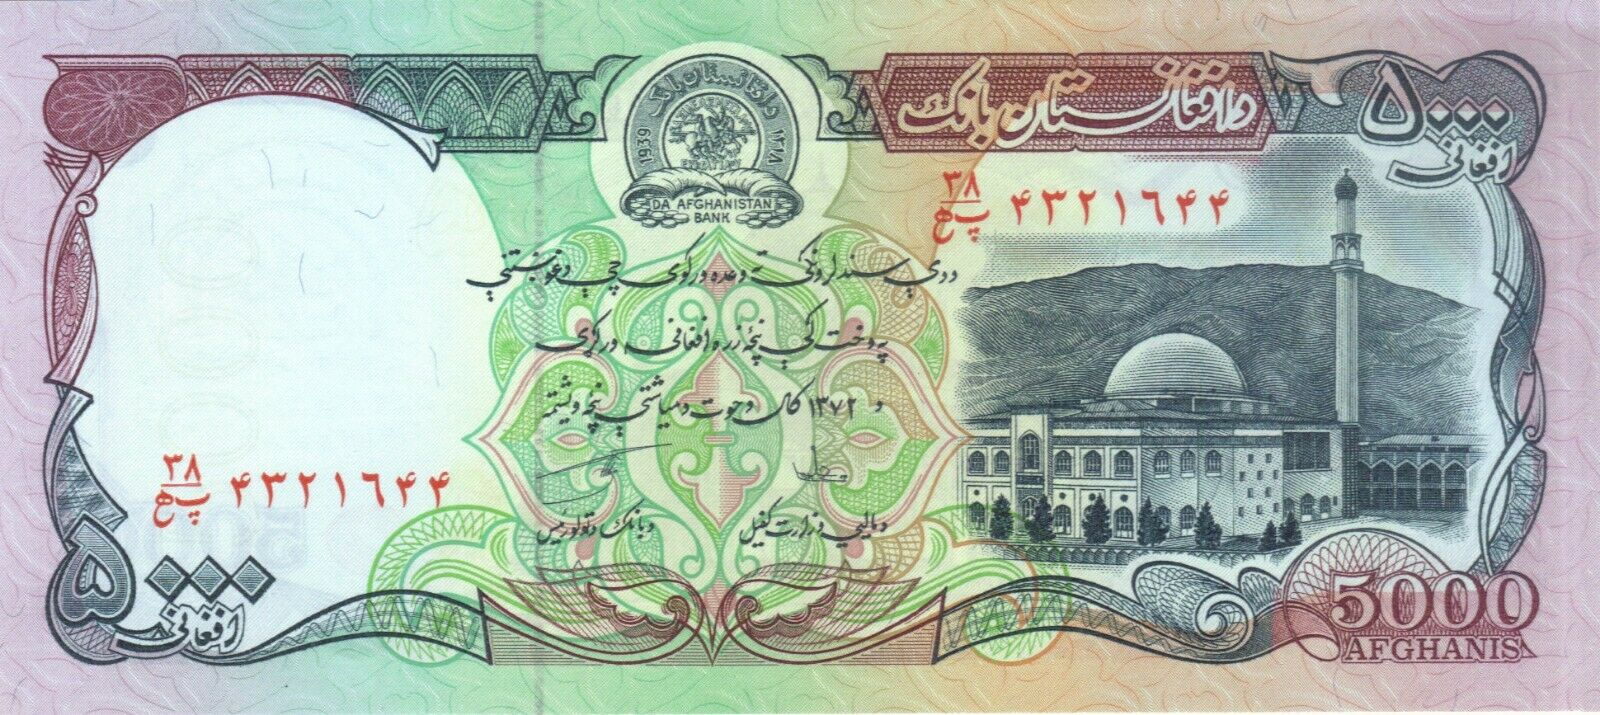 1993 5000 Afghanis Afghanistan Currency Unc Banknote Note Money Bank Bill Cash